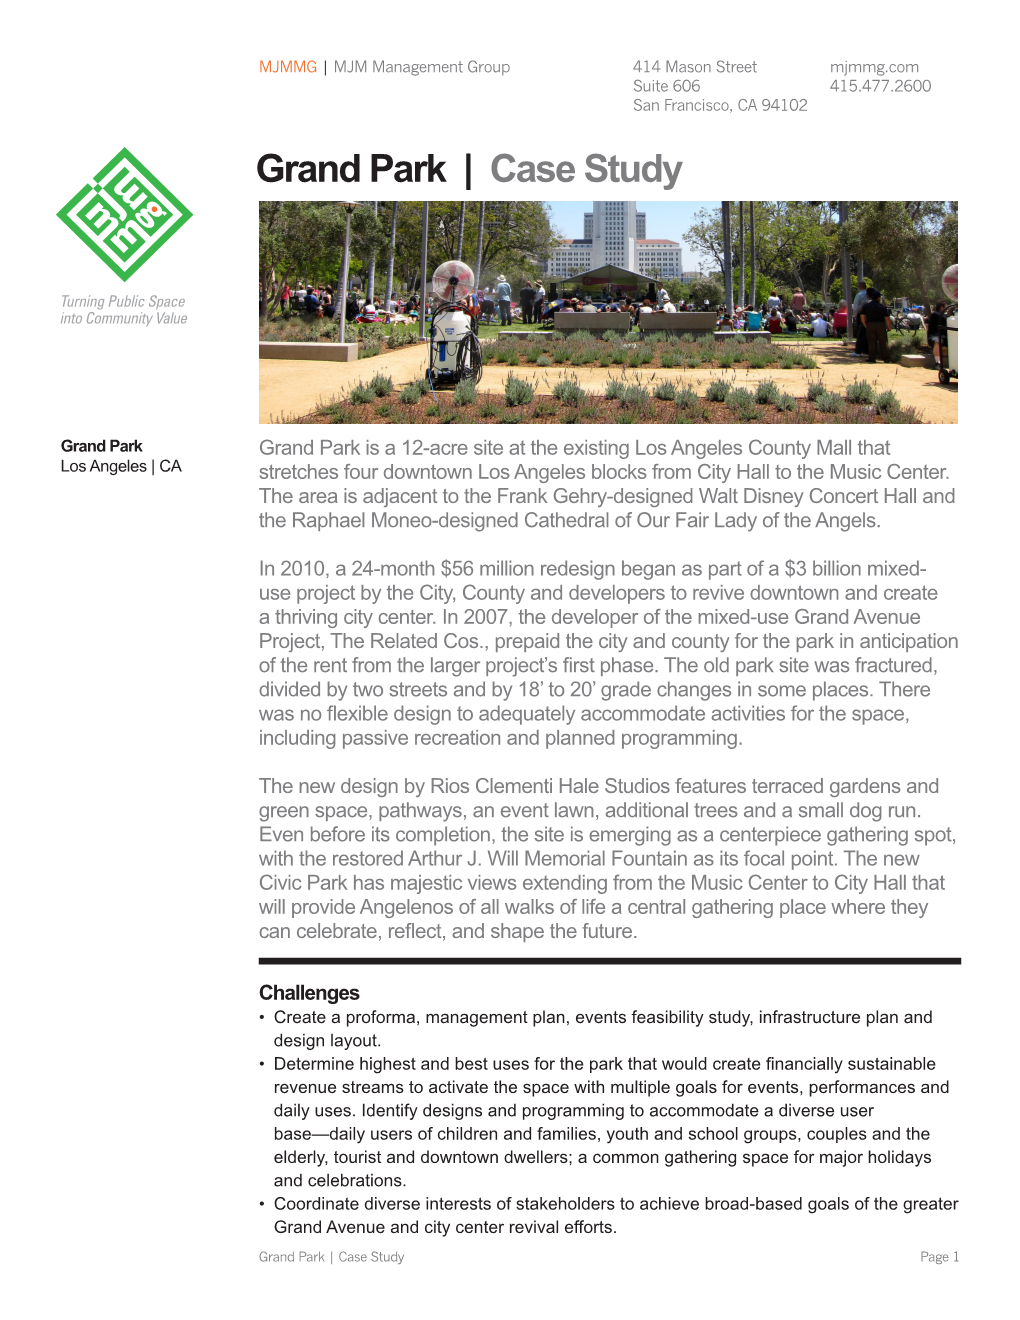 Grand Park | Case Study